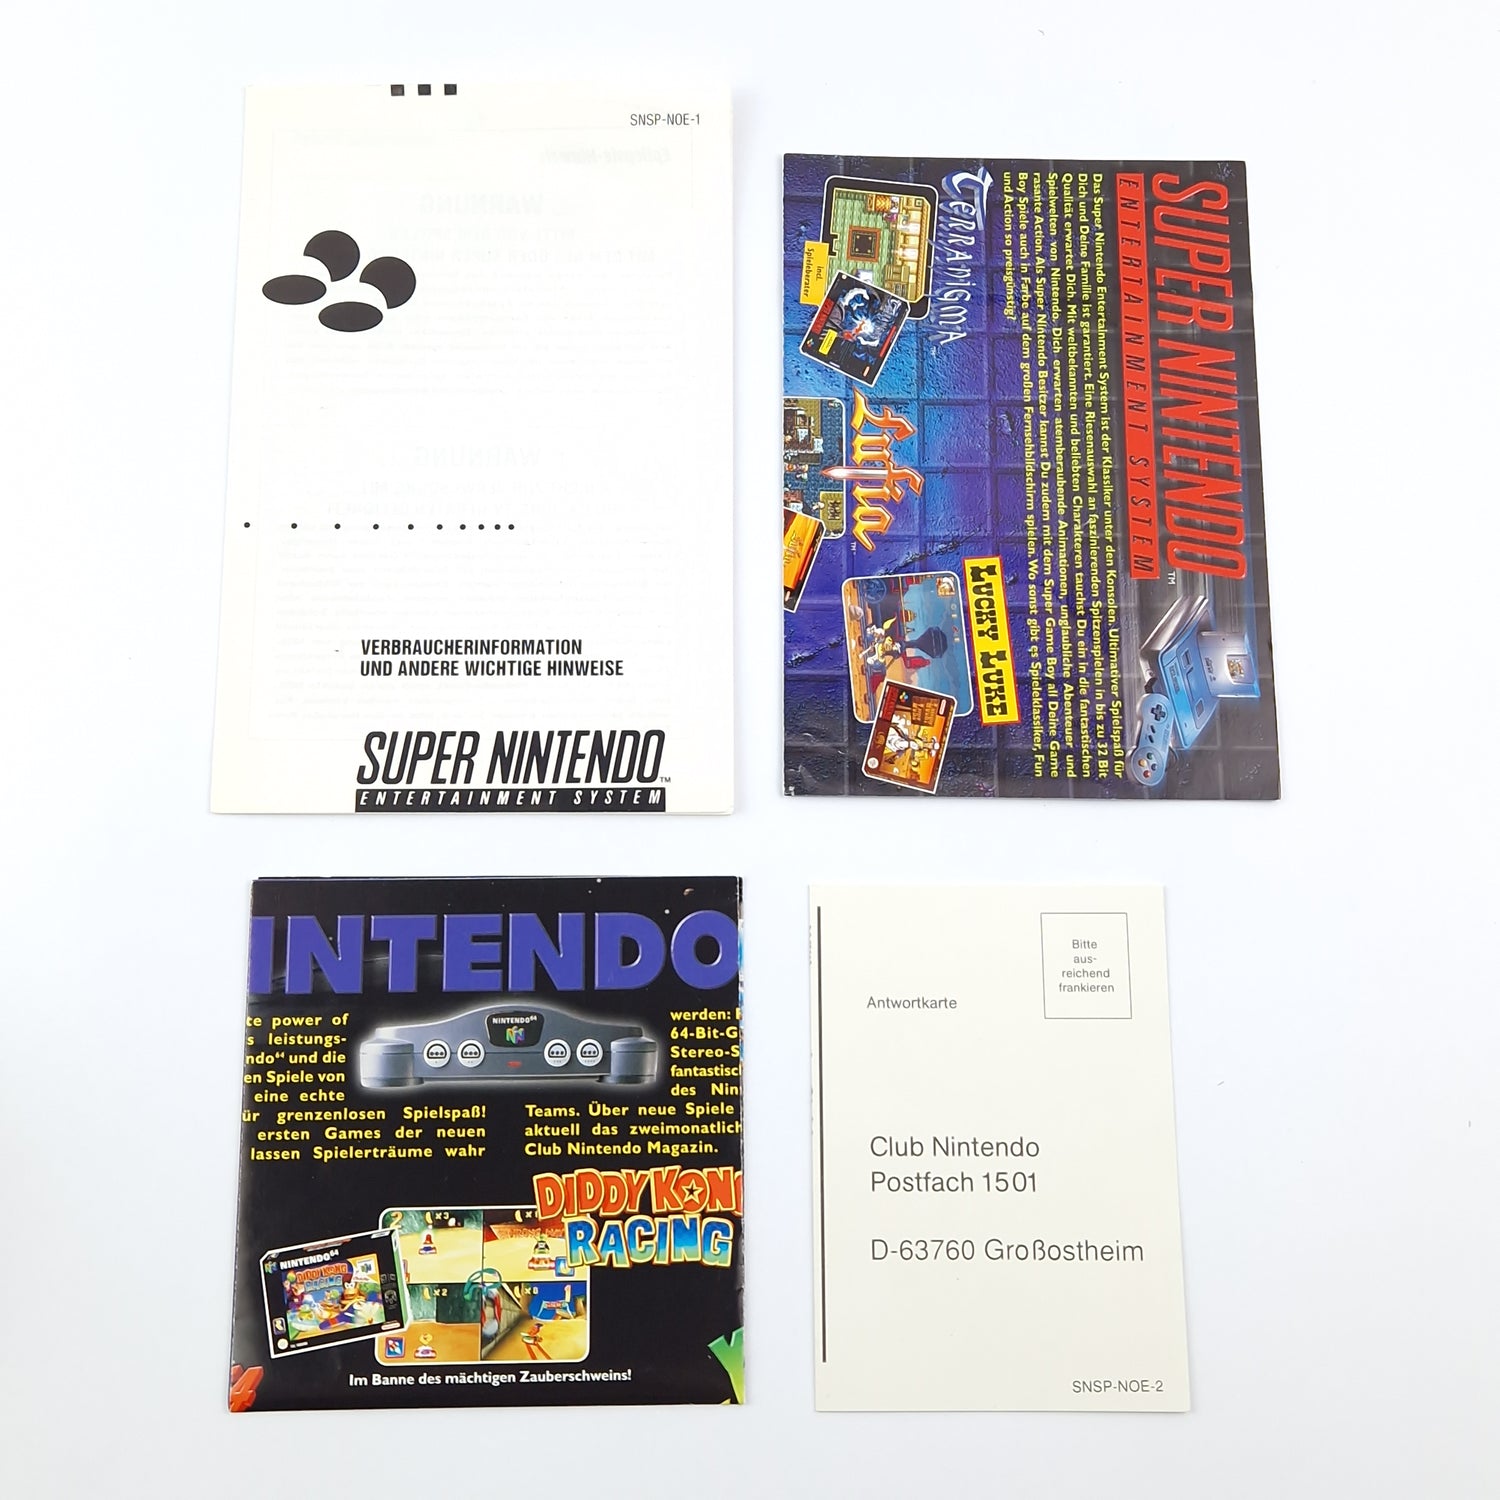 Super Nintendo game: Super Metroid - OVP instructions module | SNES Big Box PAL